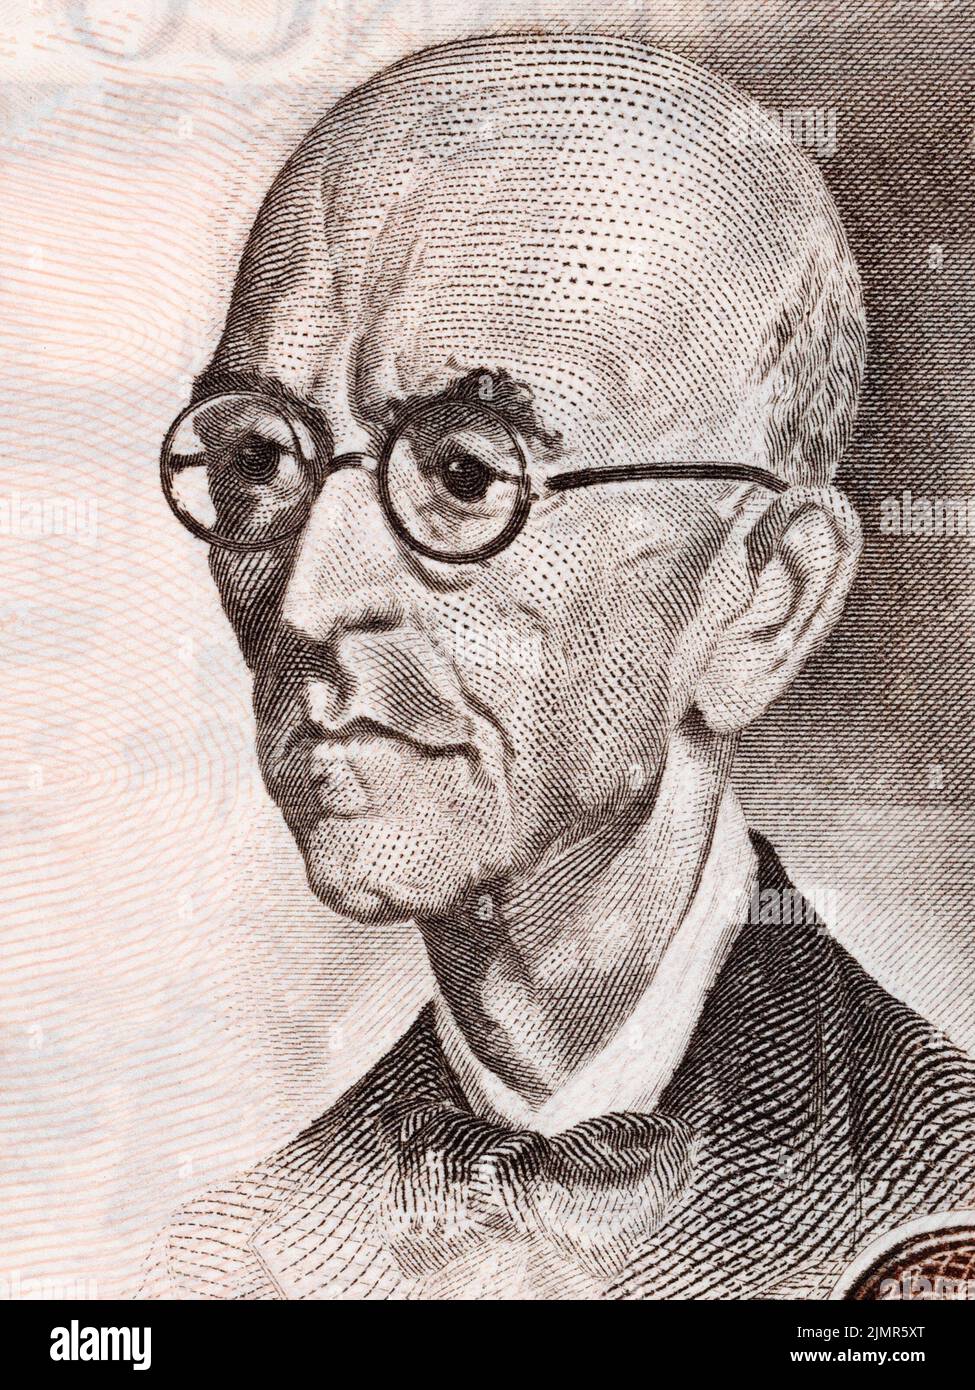 Manuel de Falla portrait from Spanish money Stock Photo